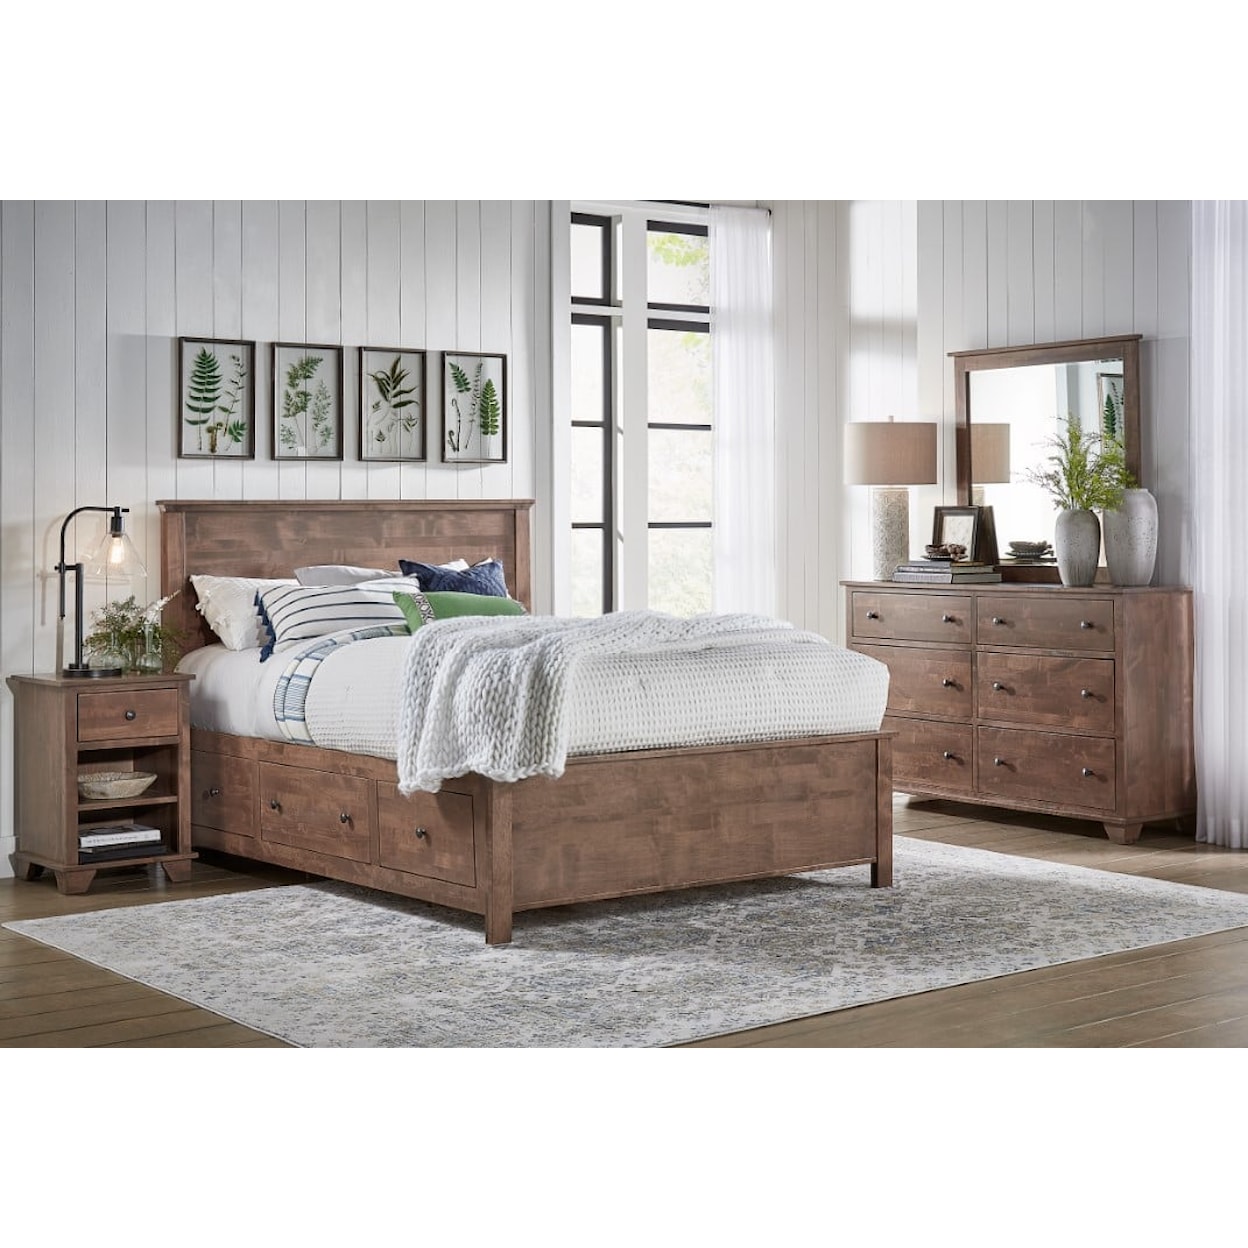 Archbold Furniture Portland King Panel Shiplap Bed